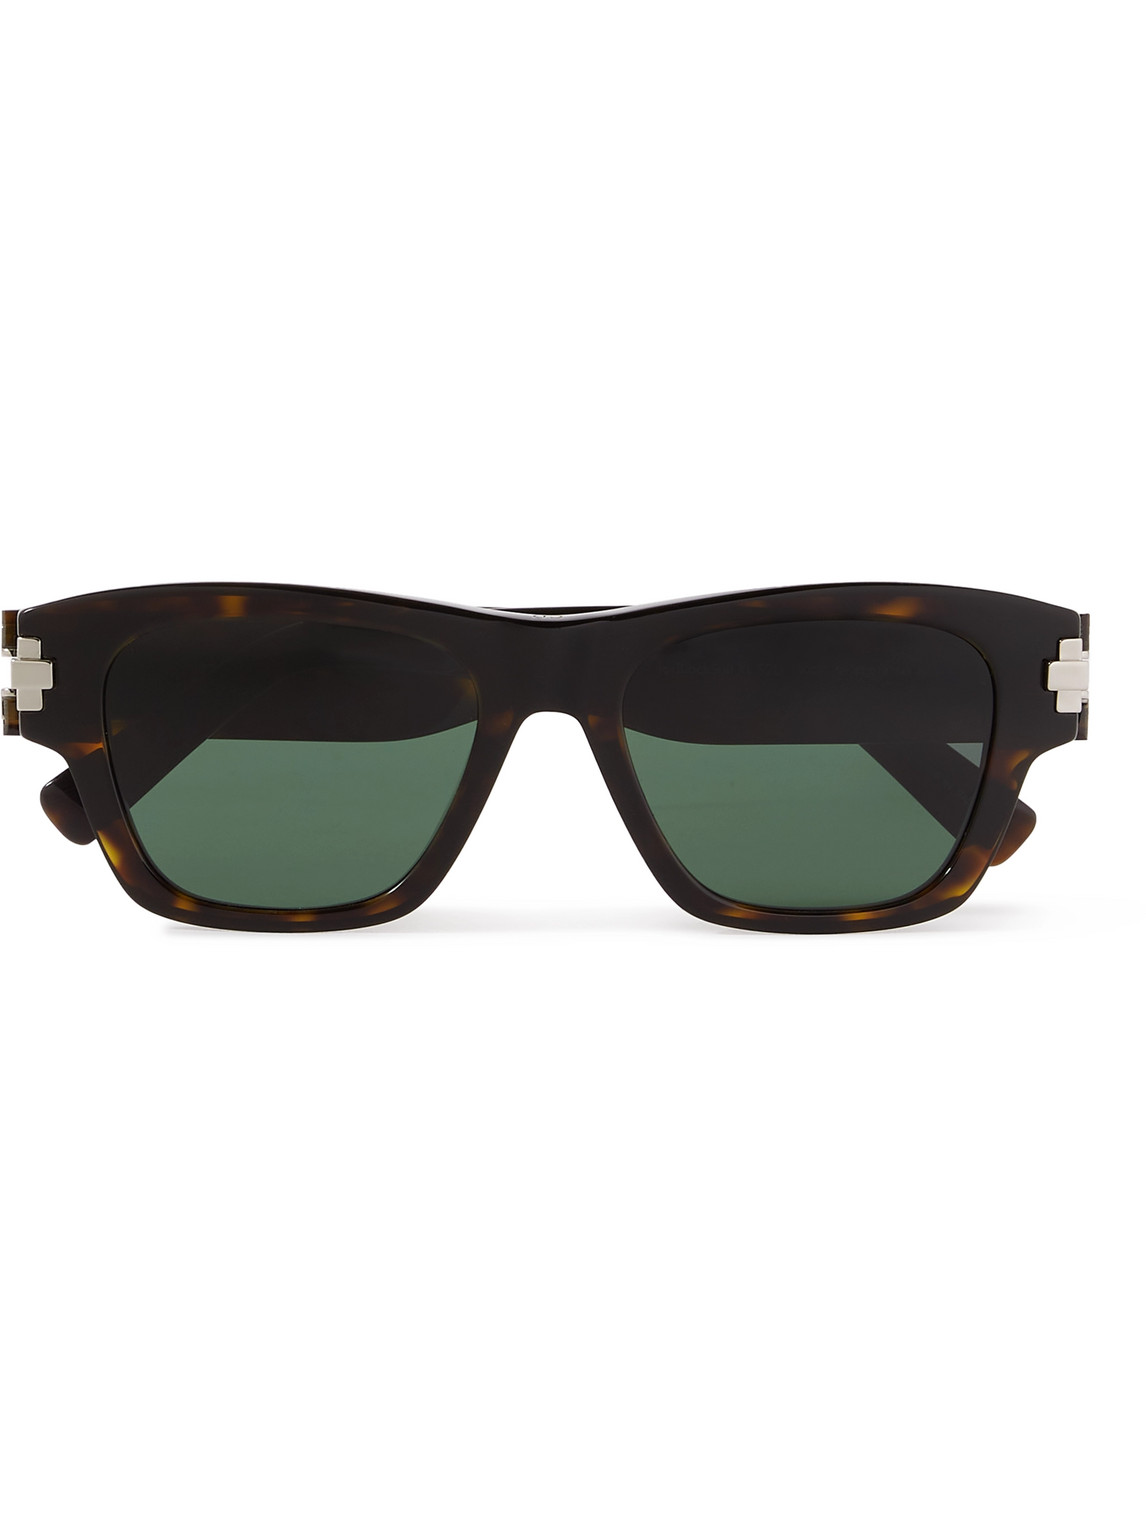 Dior Eyewear - DiorBlackSuit XL S2U Square-Frame Tortoiseshell Acetate Sunglasses - Men - Tortoiseshell von Dior Eyewear